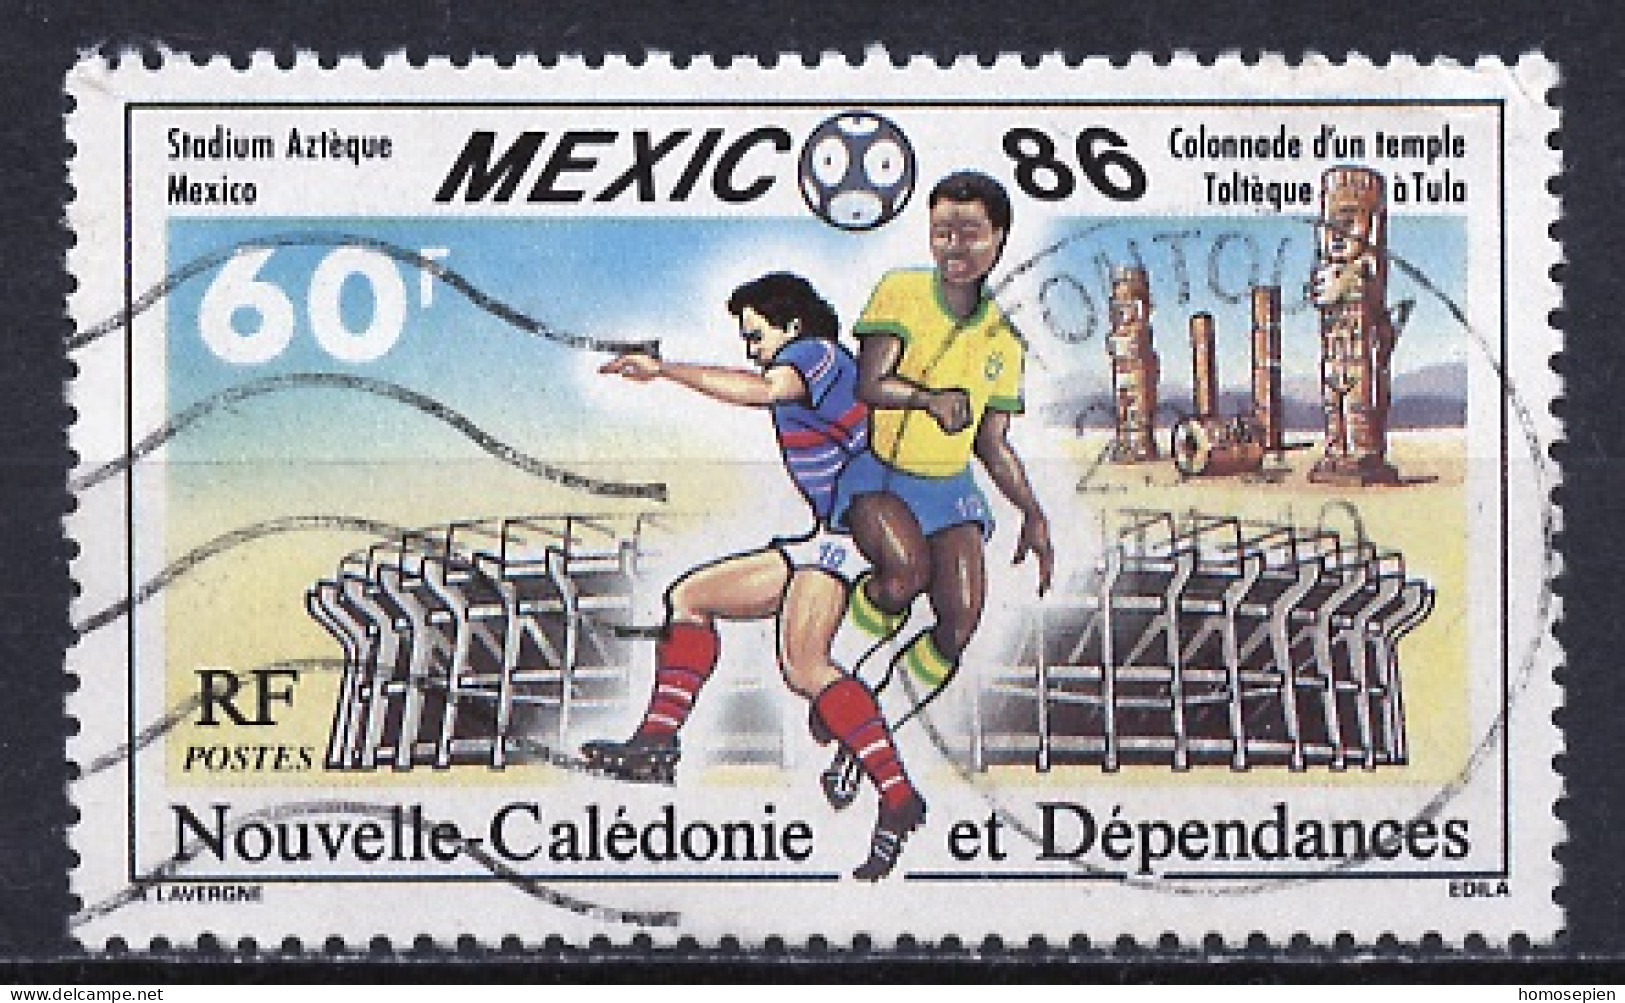 Nouvelle Calédonie - Neukaledonien - New Caledonia 1986 Y&T N°518 - Michel N°781 (o) - 60f Coupe Du Monde  De Football - Gebraucht